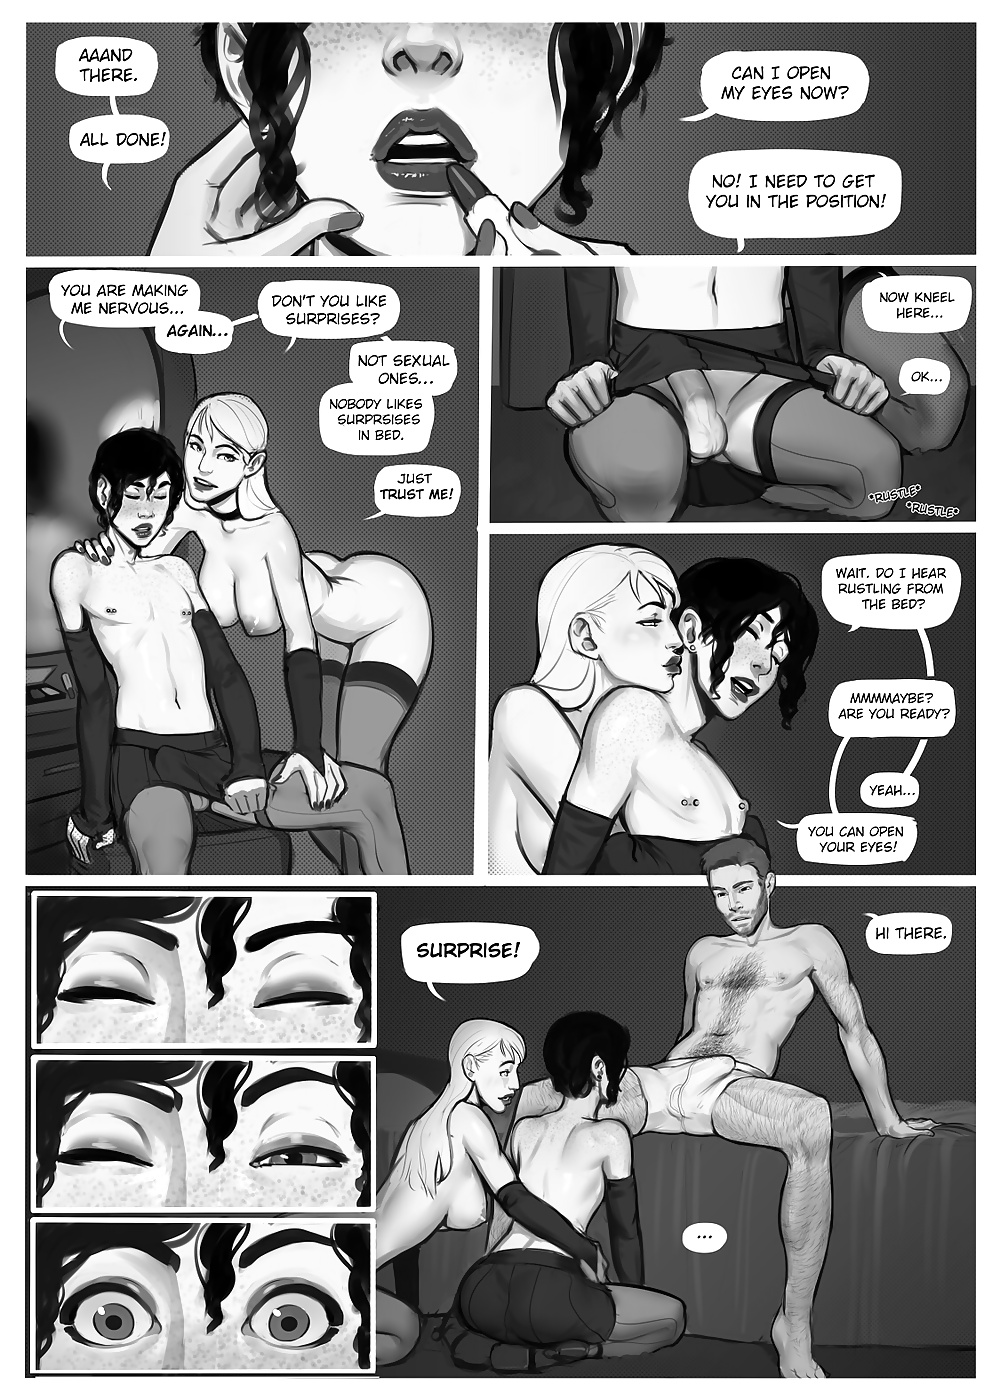 The single greatest sex comic ever done - bi mmf #29777755